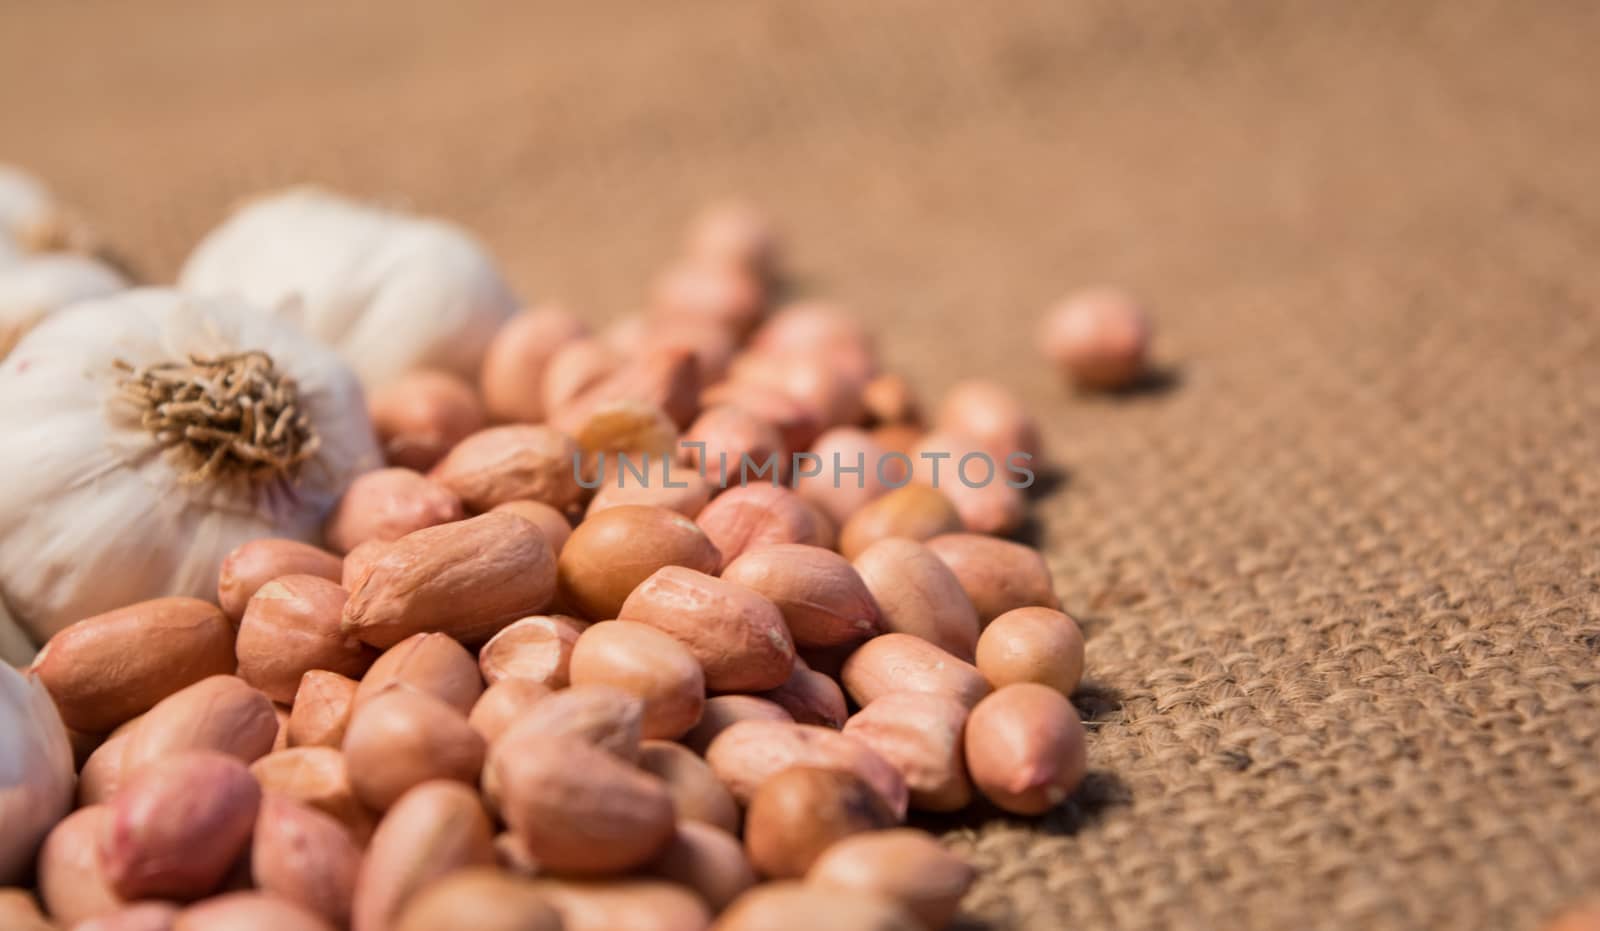 Group of Garlic and groun nuts on sackcloth for food. by lakshmiprasad.maski@gmai.com